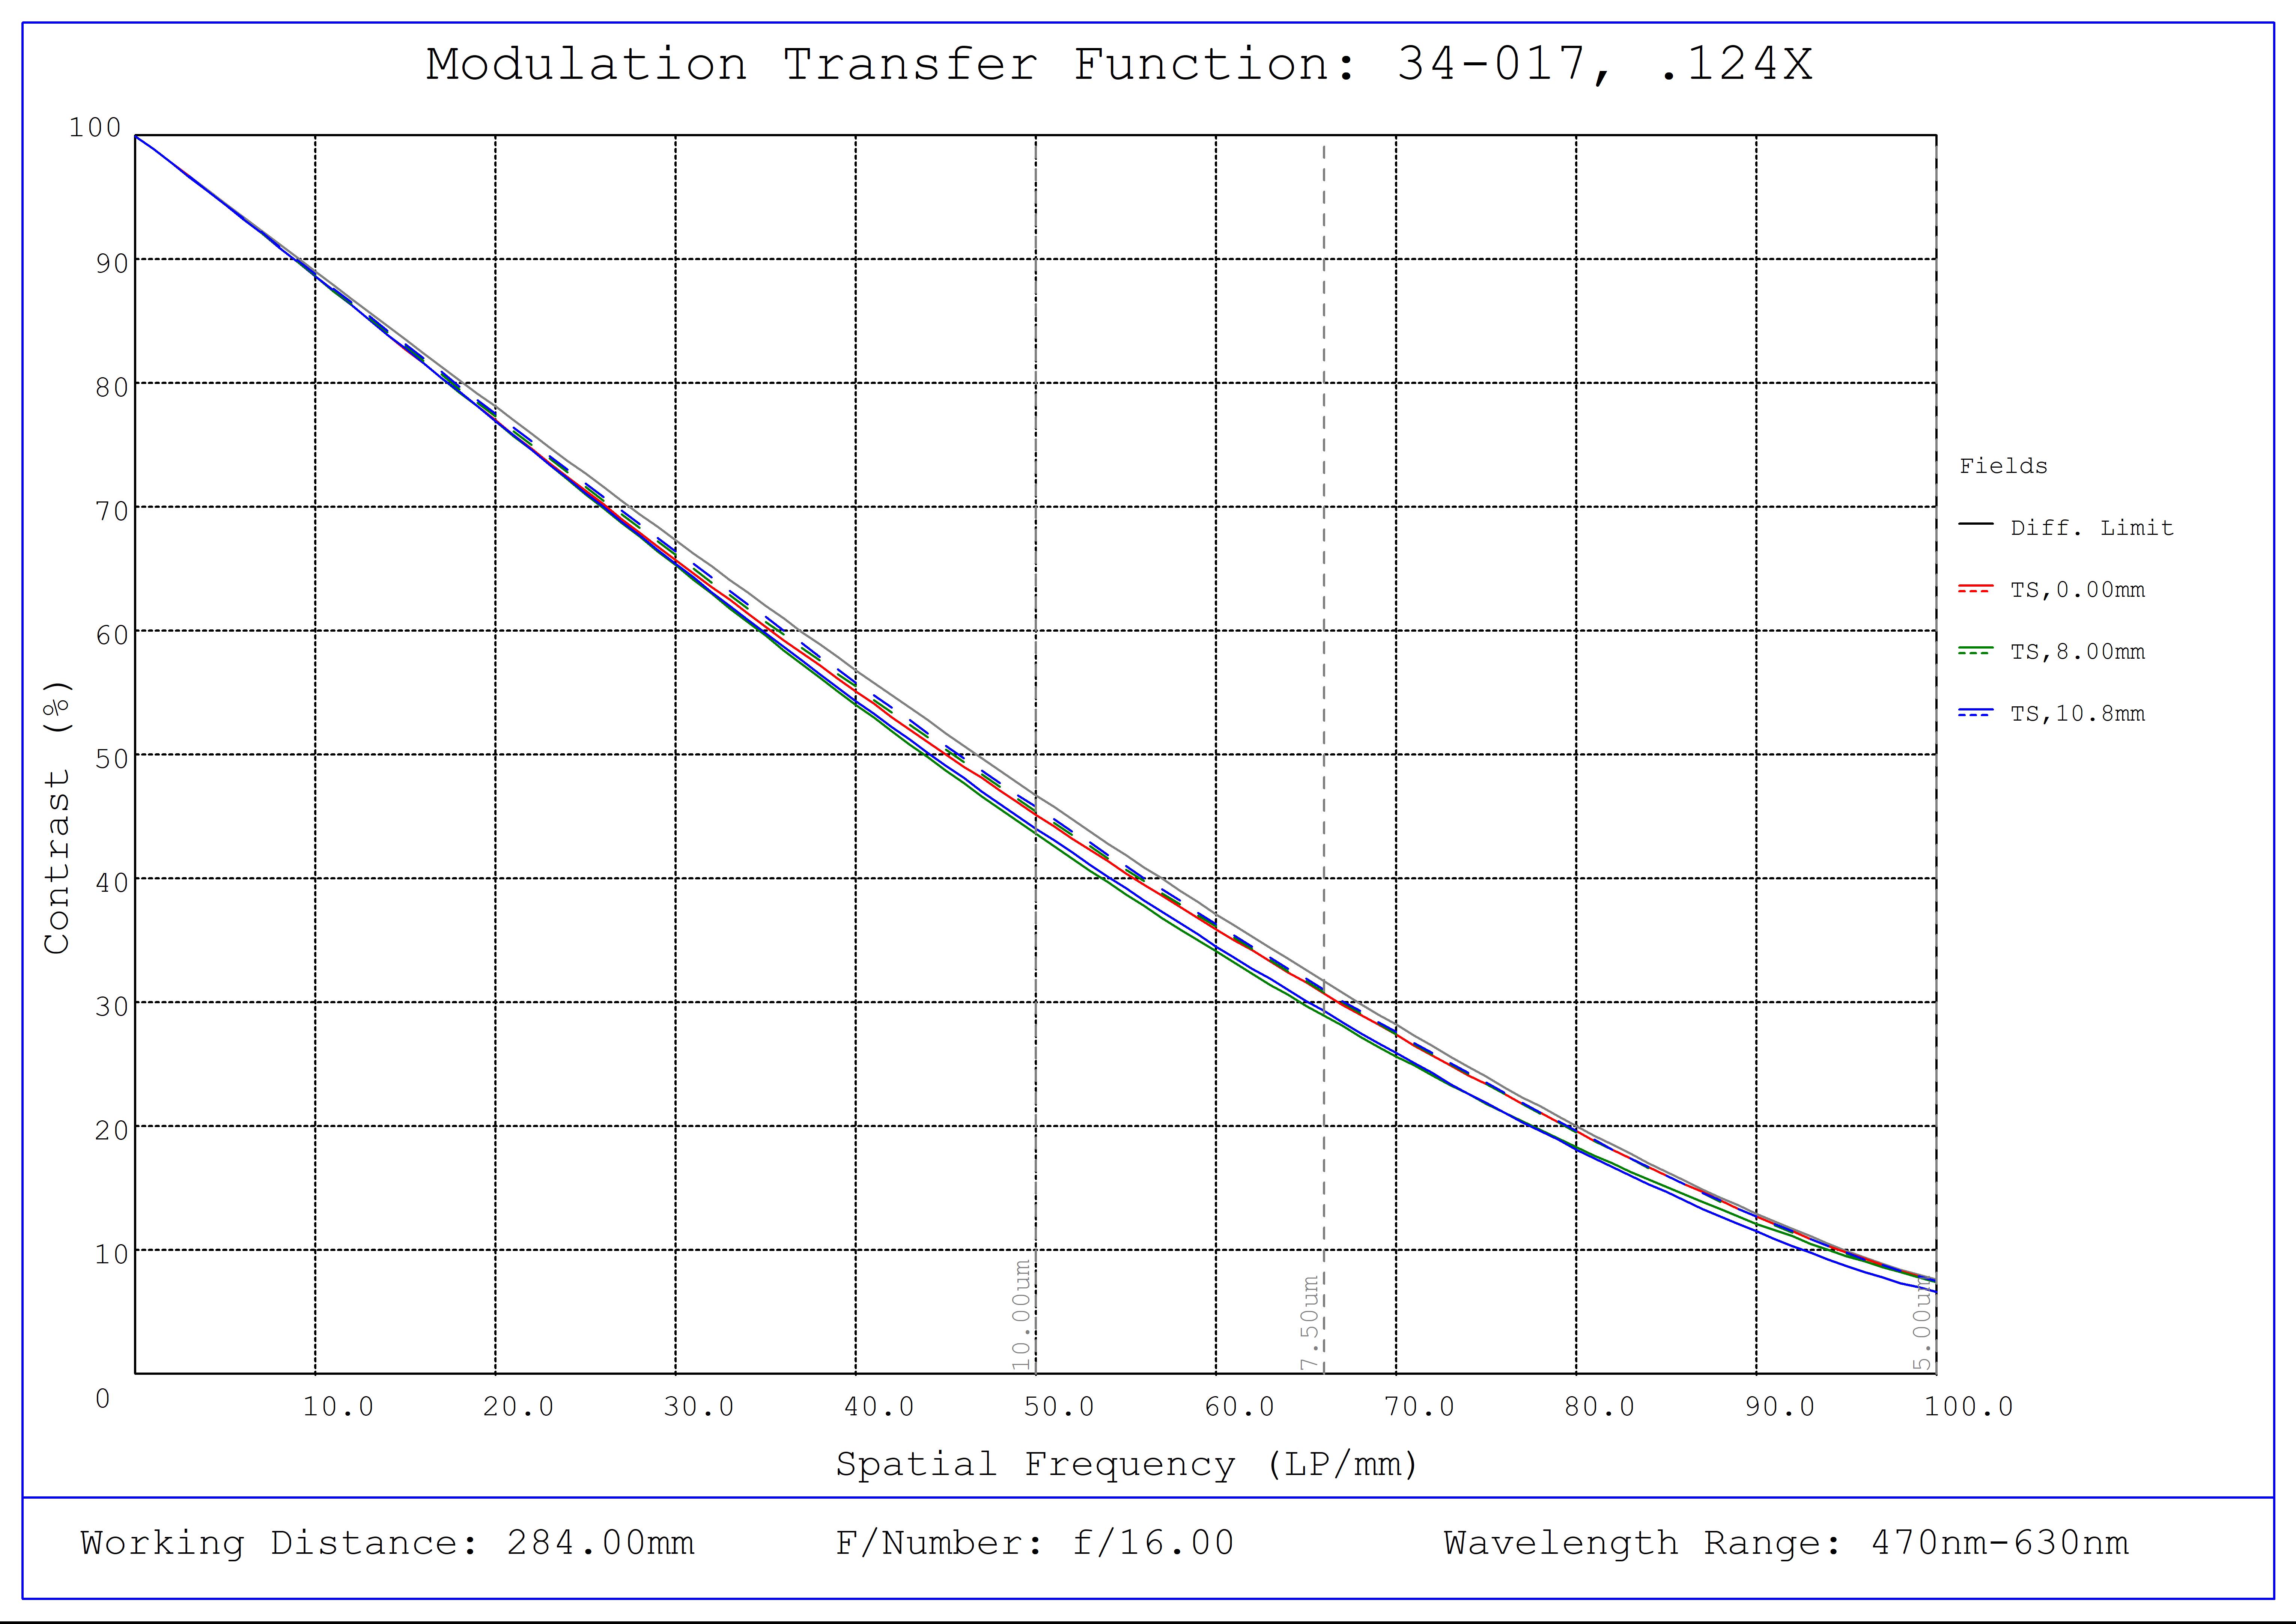 #34-017, 0.124X, 4/3" C-Mount TitanTL® Telecentric Lens, Modulated Transfer Function (MTF) Plot, 284mm Working Distance, f16